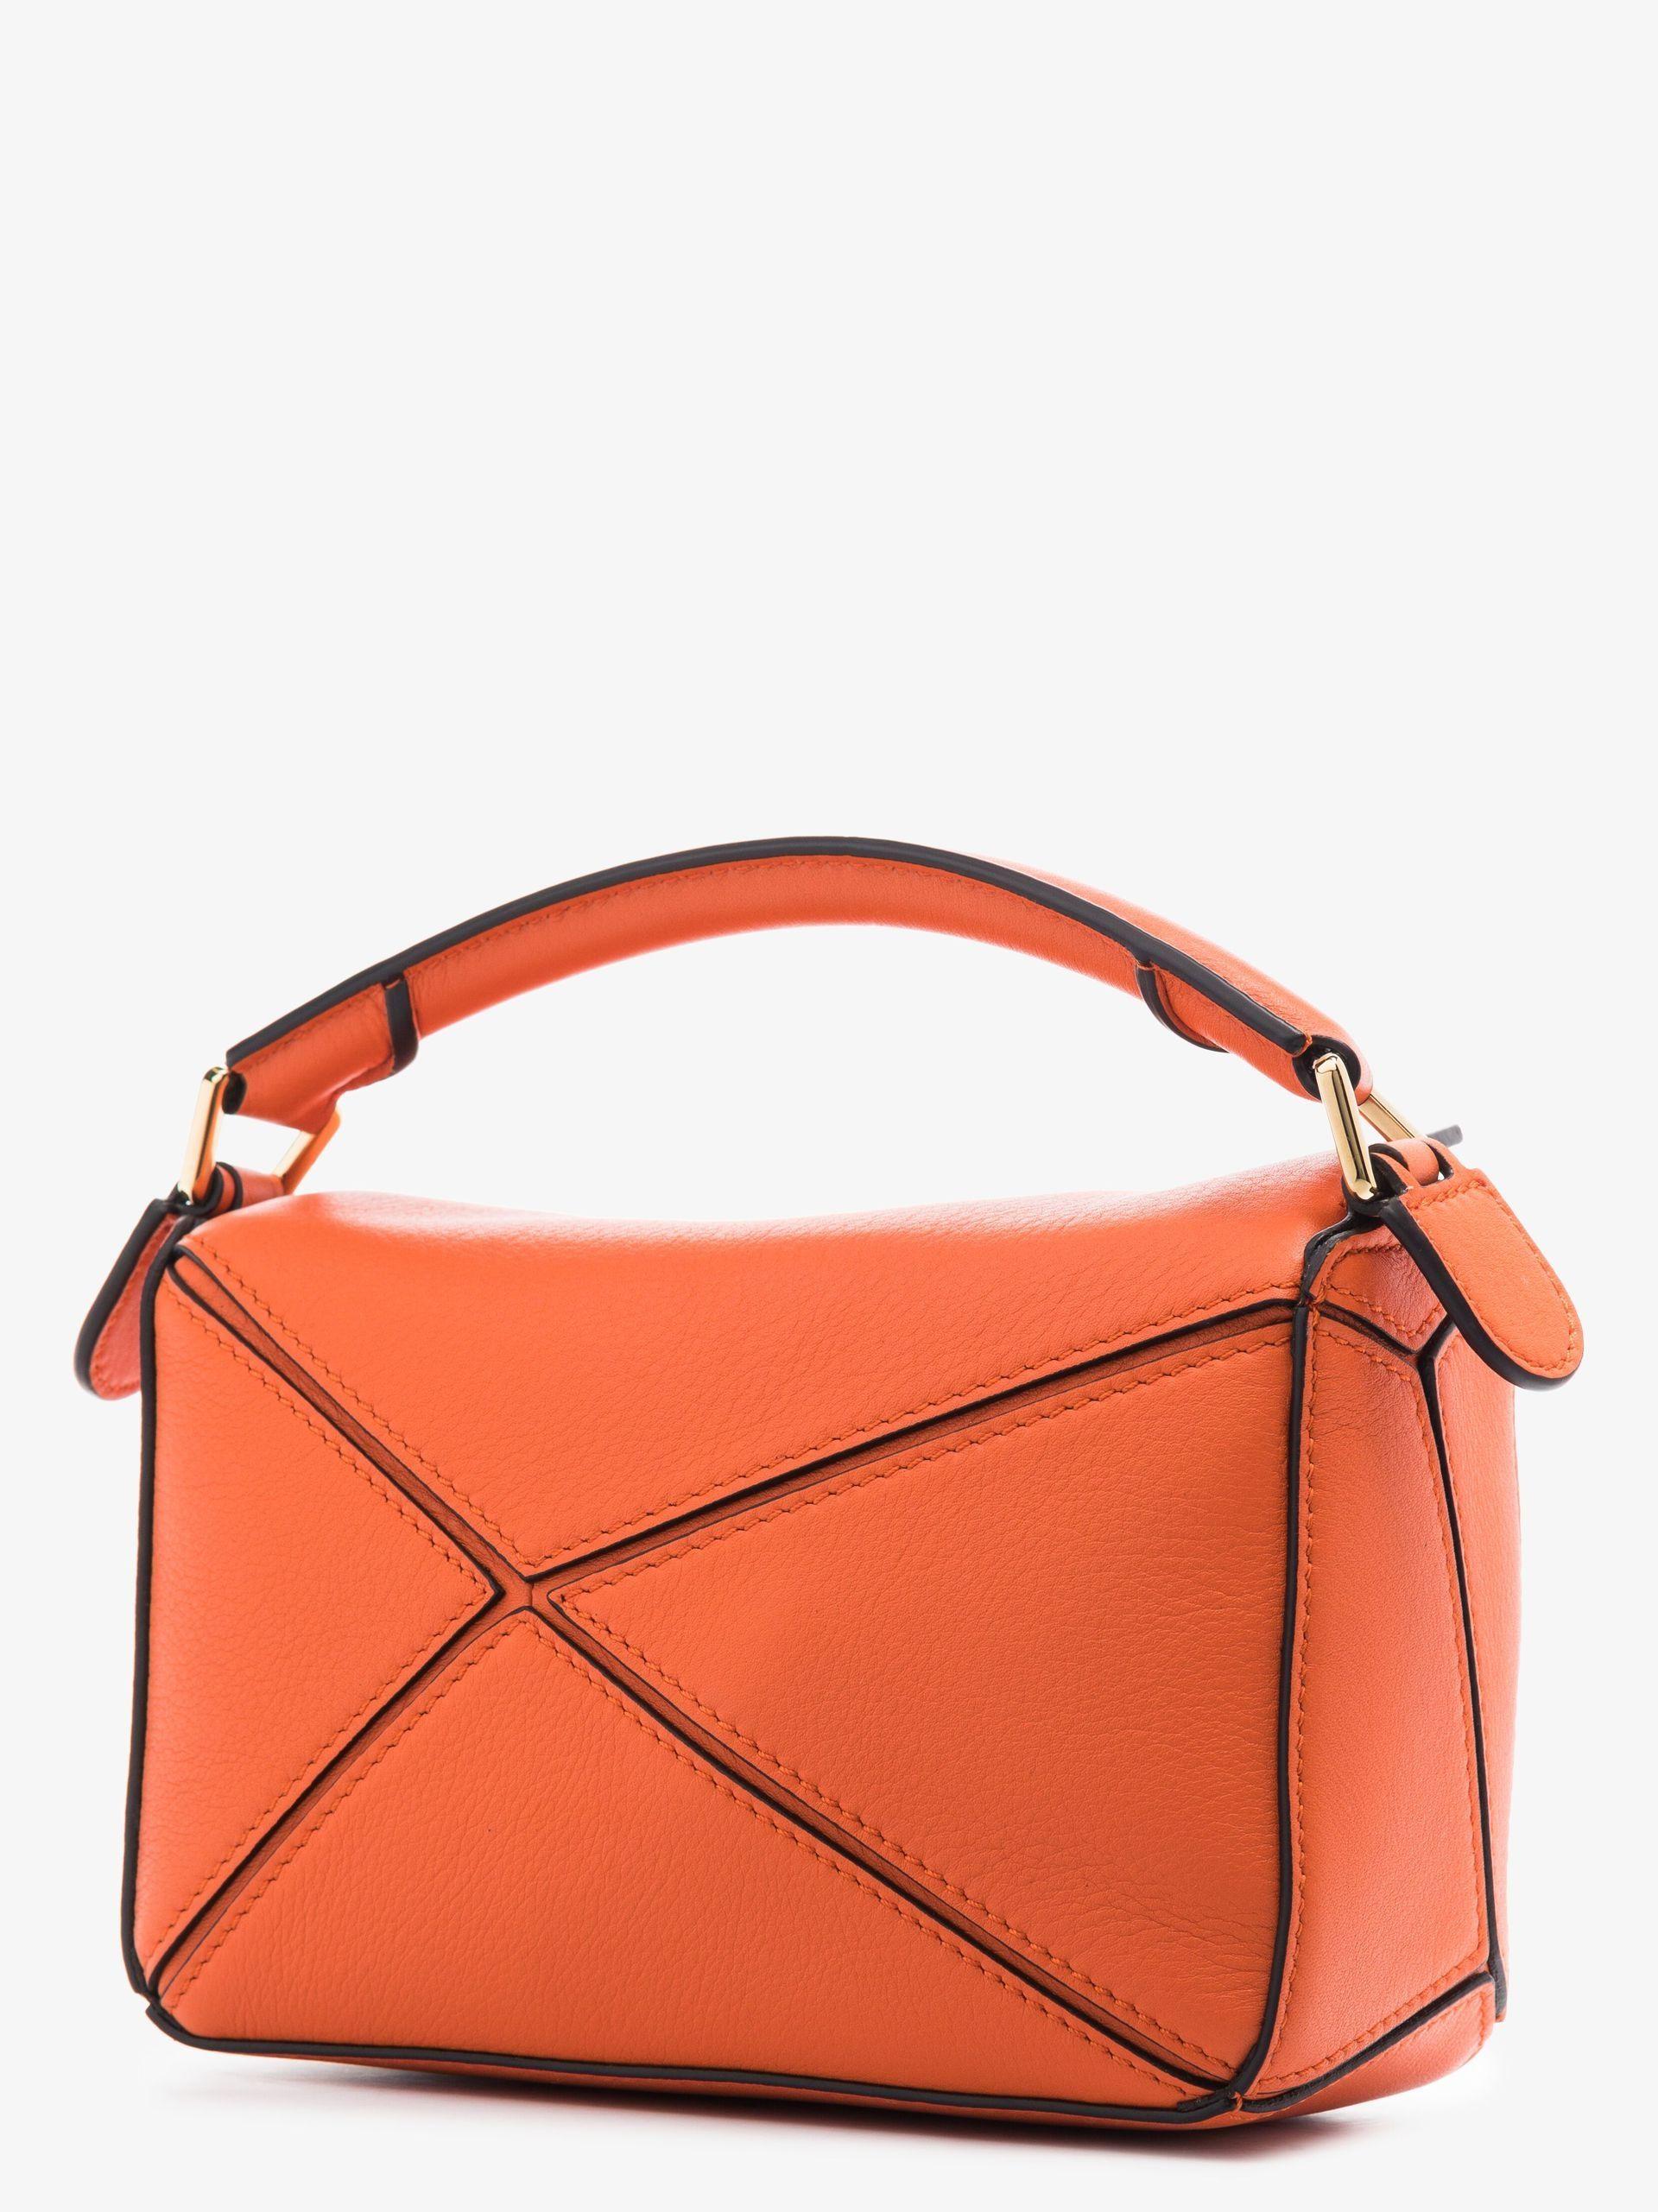 Mini Shoulder Orange Bag by Atelier Mélange - ZOCO LAB